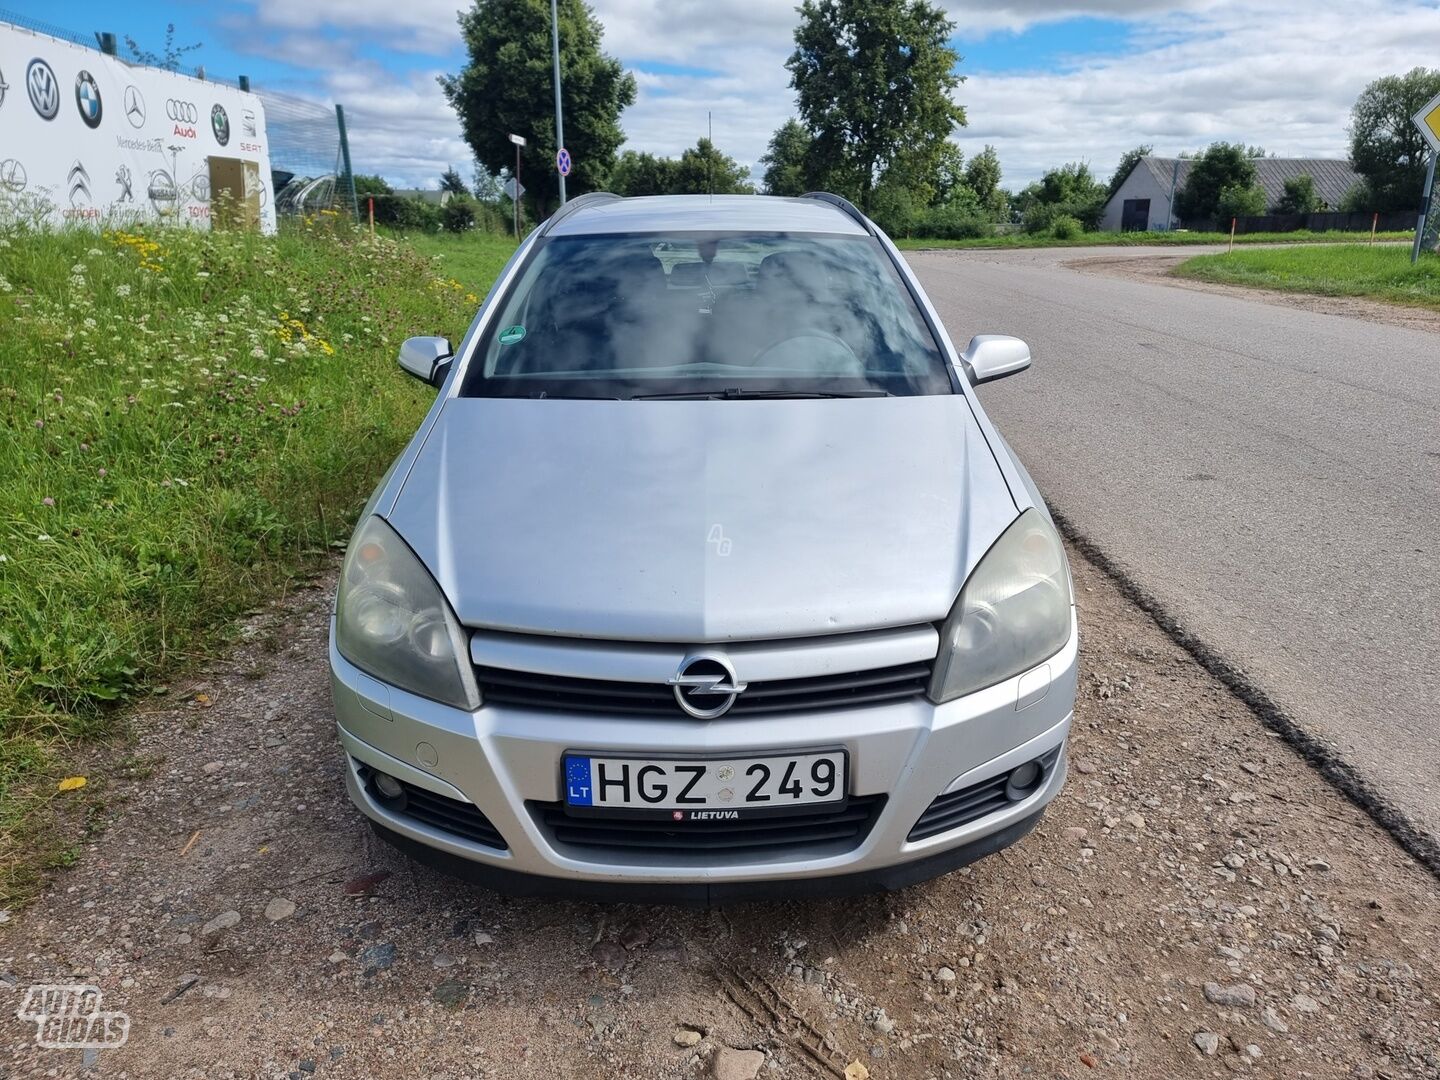 Opel Astra H 2005 г запчясти